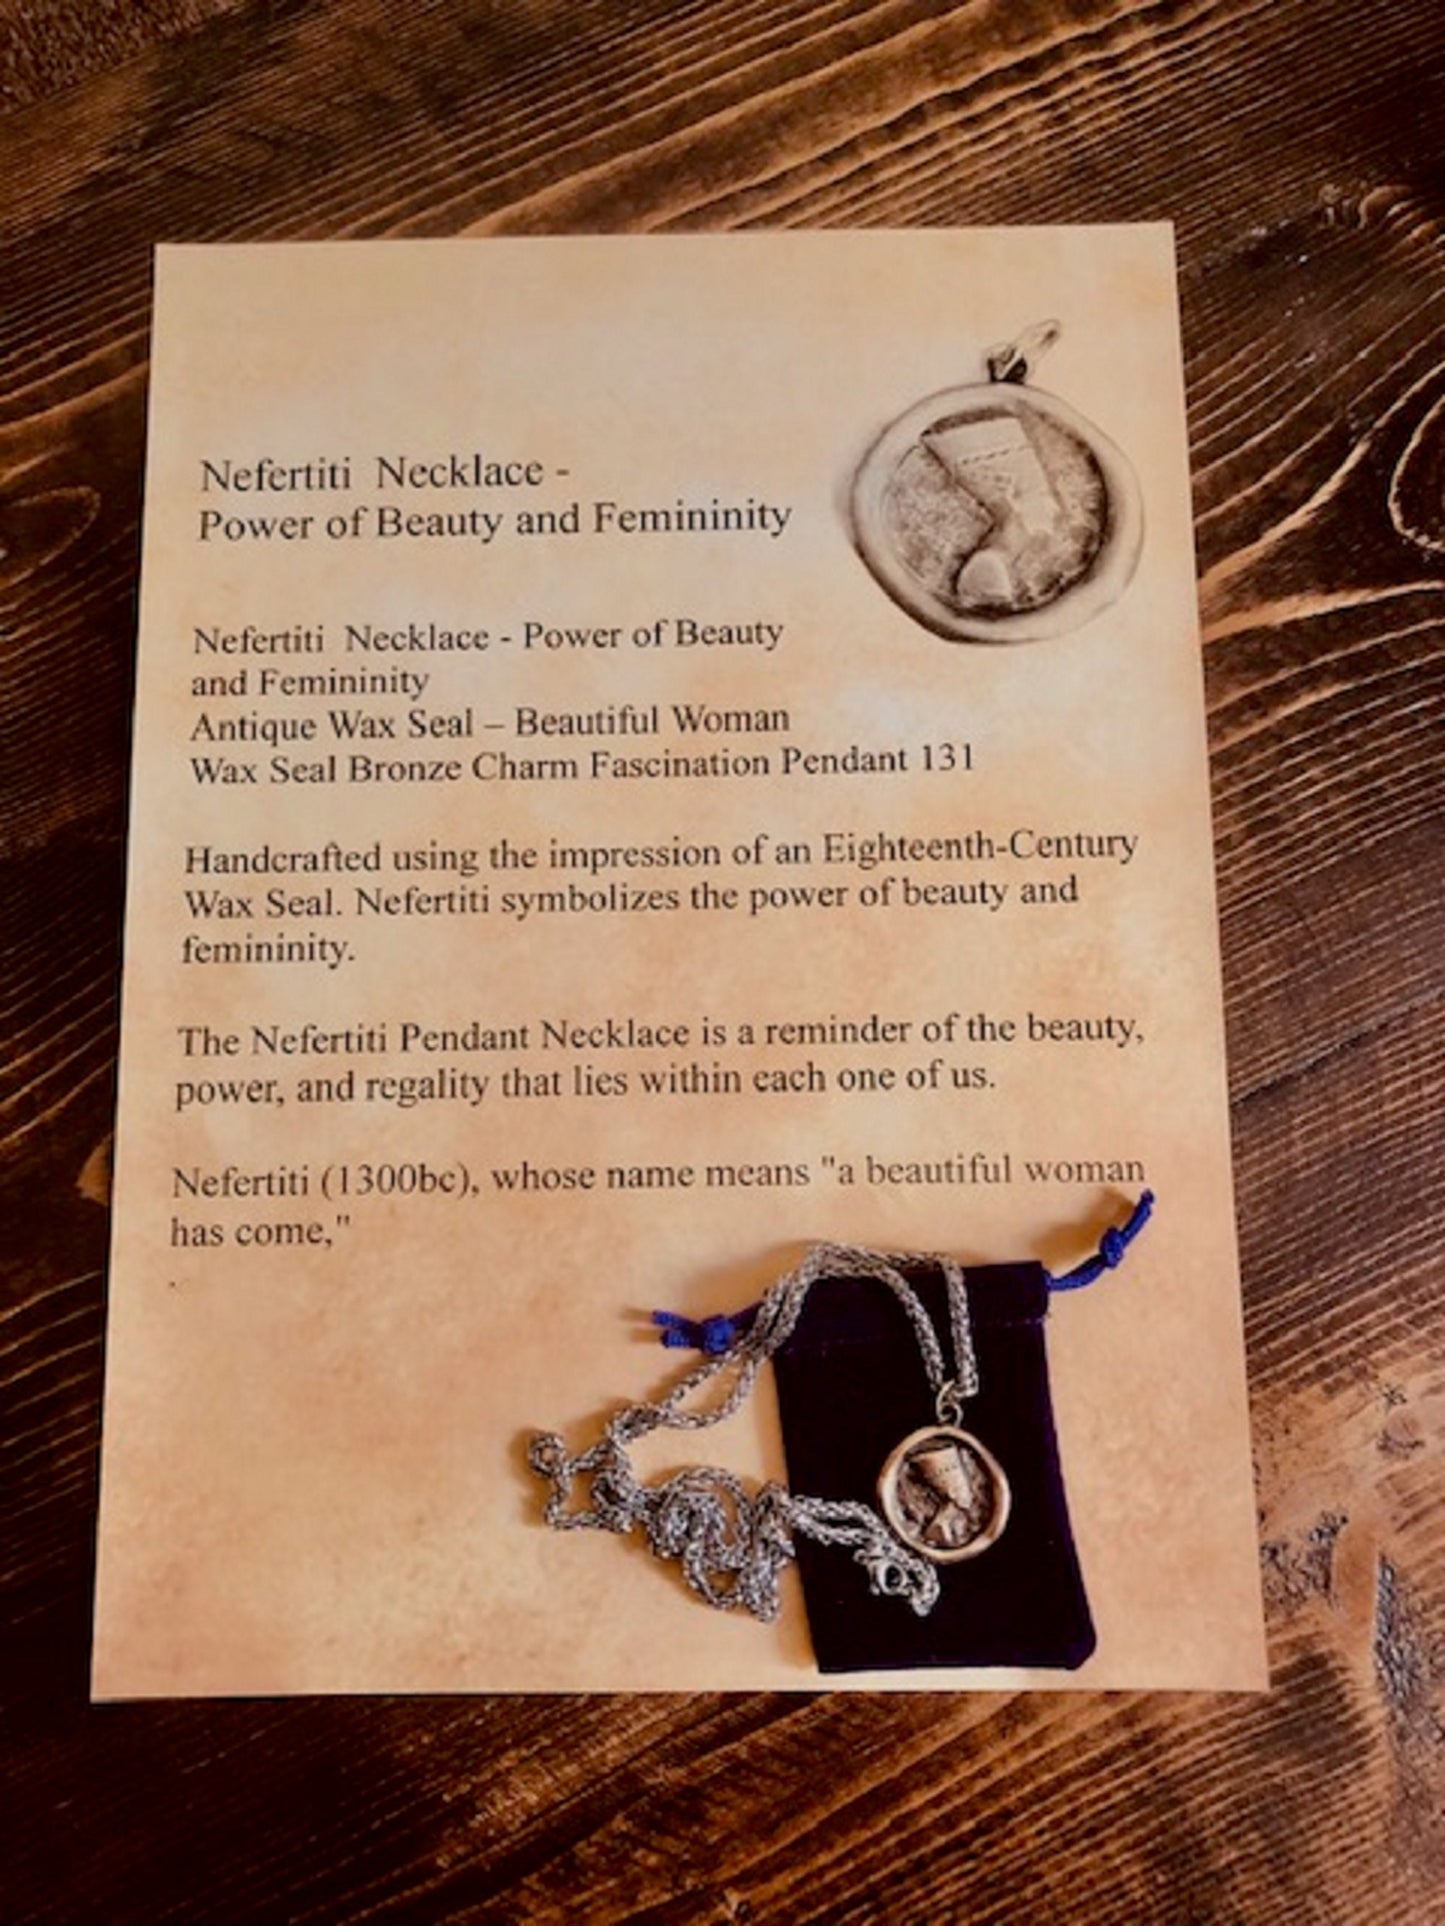 Antique Wax Seal Bronze Pendant Necklace Nefertiti Necklace - Power of Beauty and Femininity Pendant Necklace - Beautiful Woman Wax Seal 131